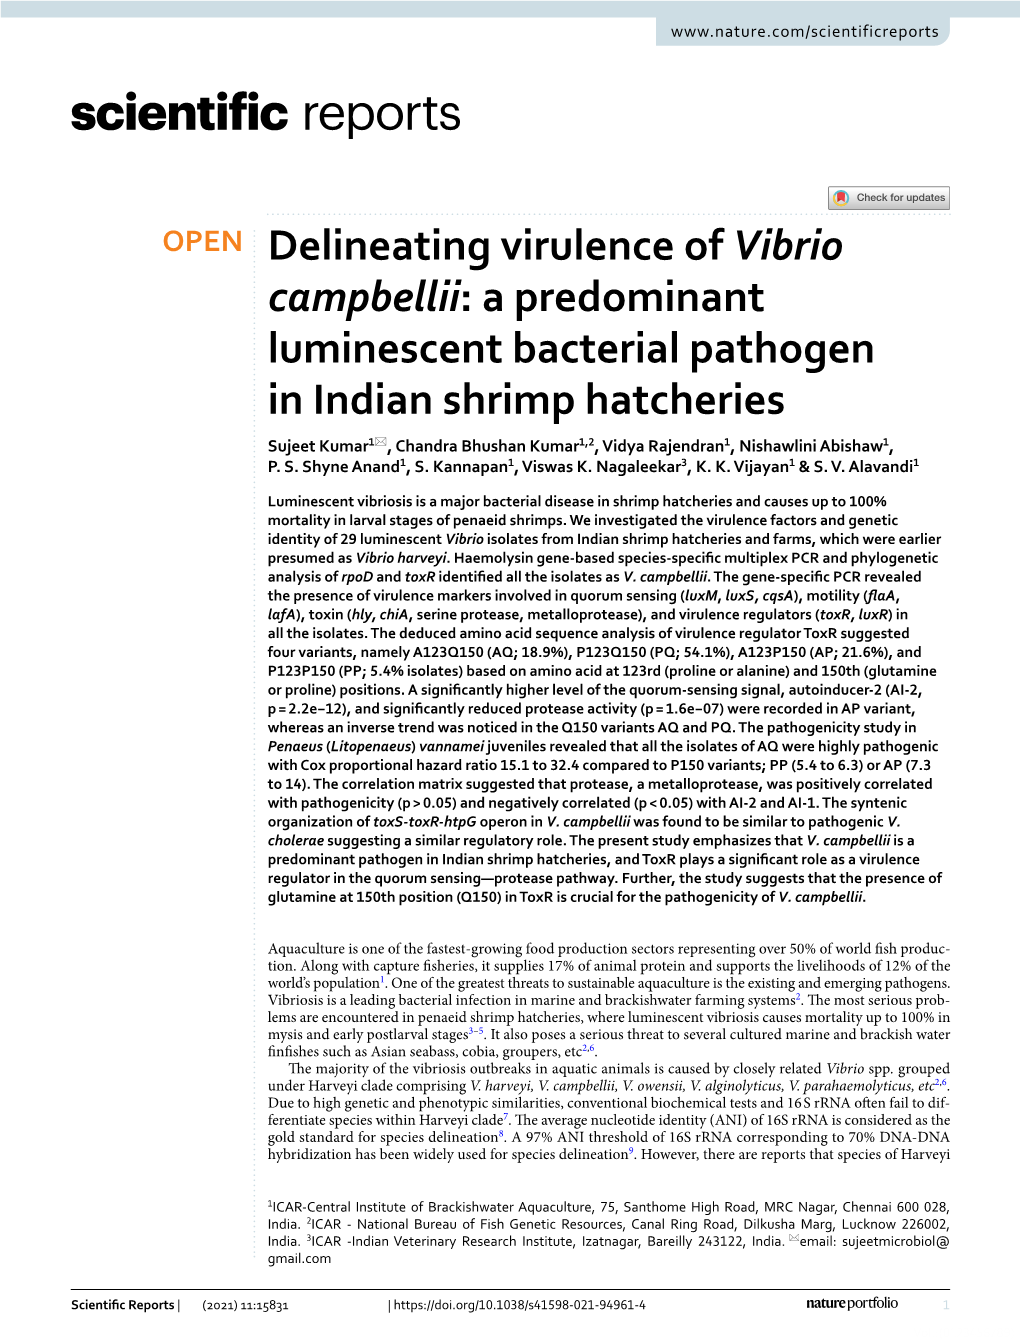 Delineating Virulence of Vibrio Campbellii